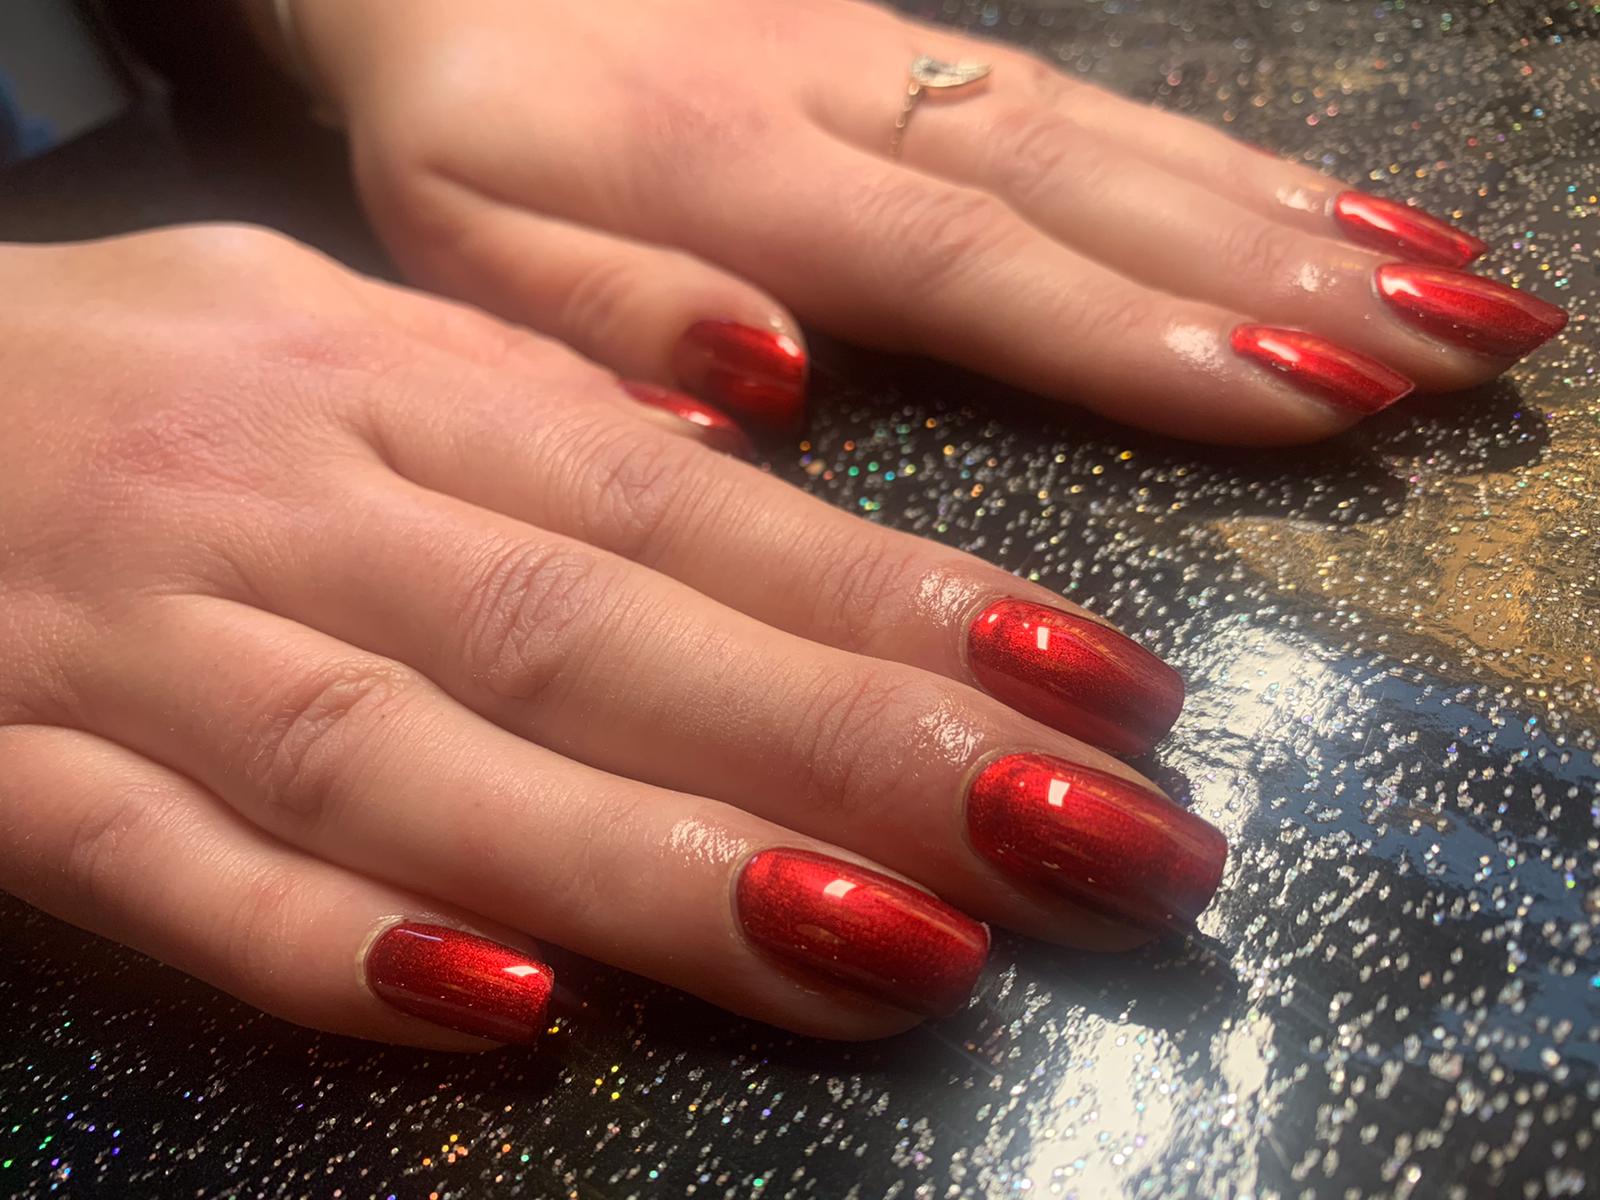 Festive Nail Art 2021 nails by natalie rose london mobile manicure